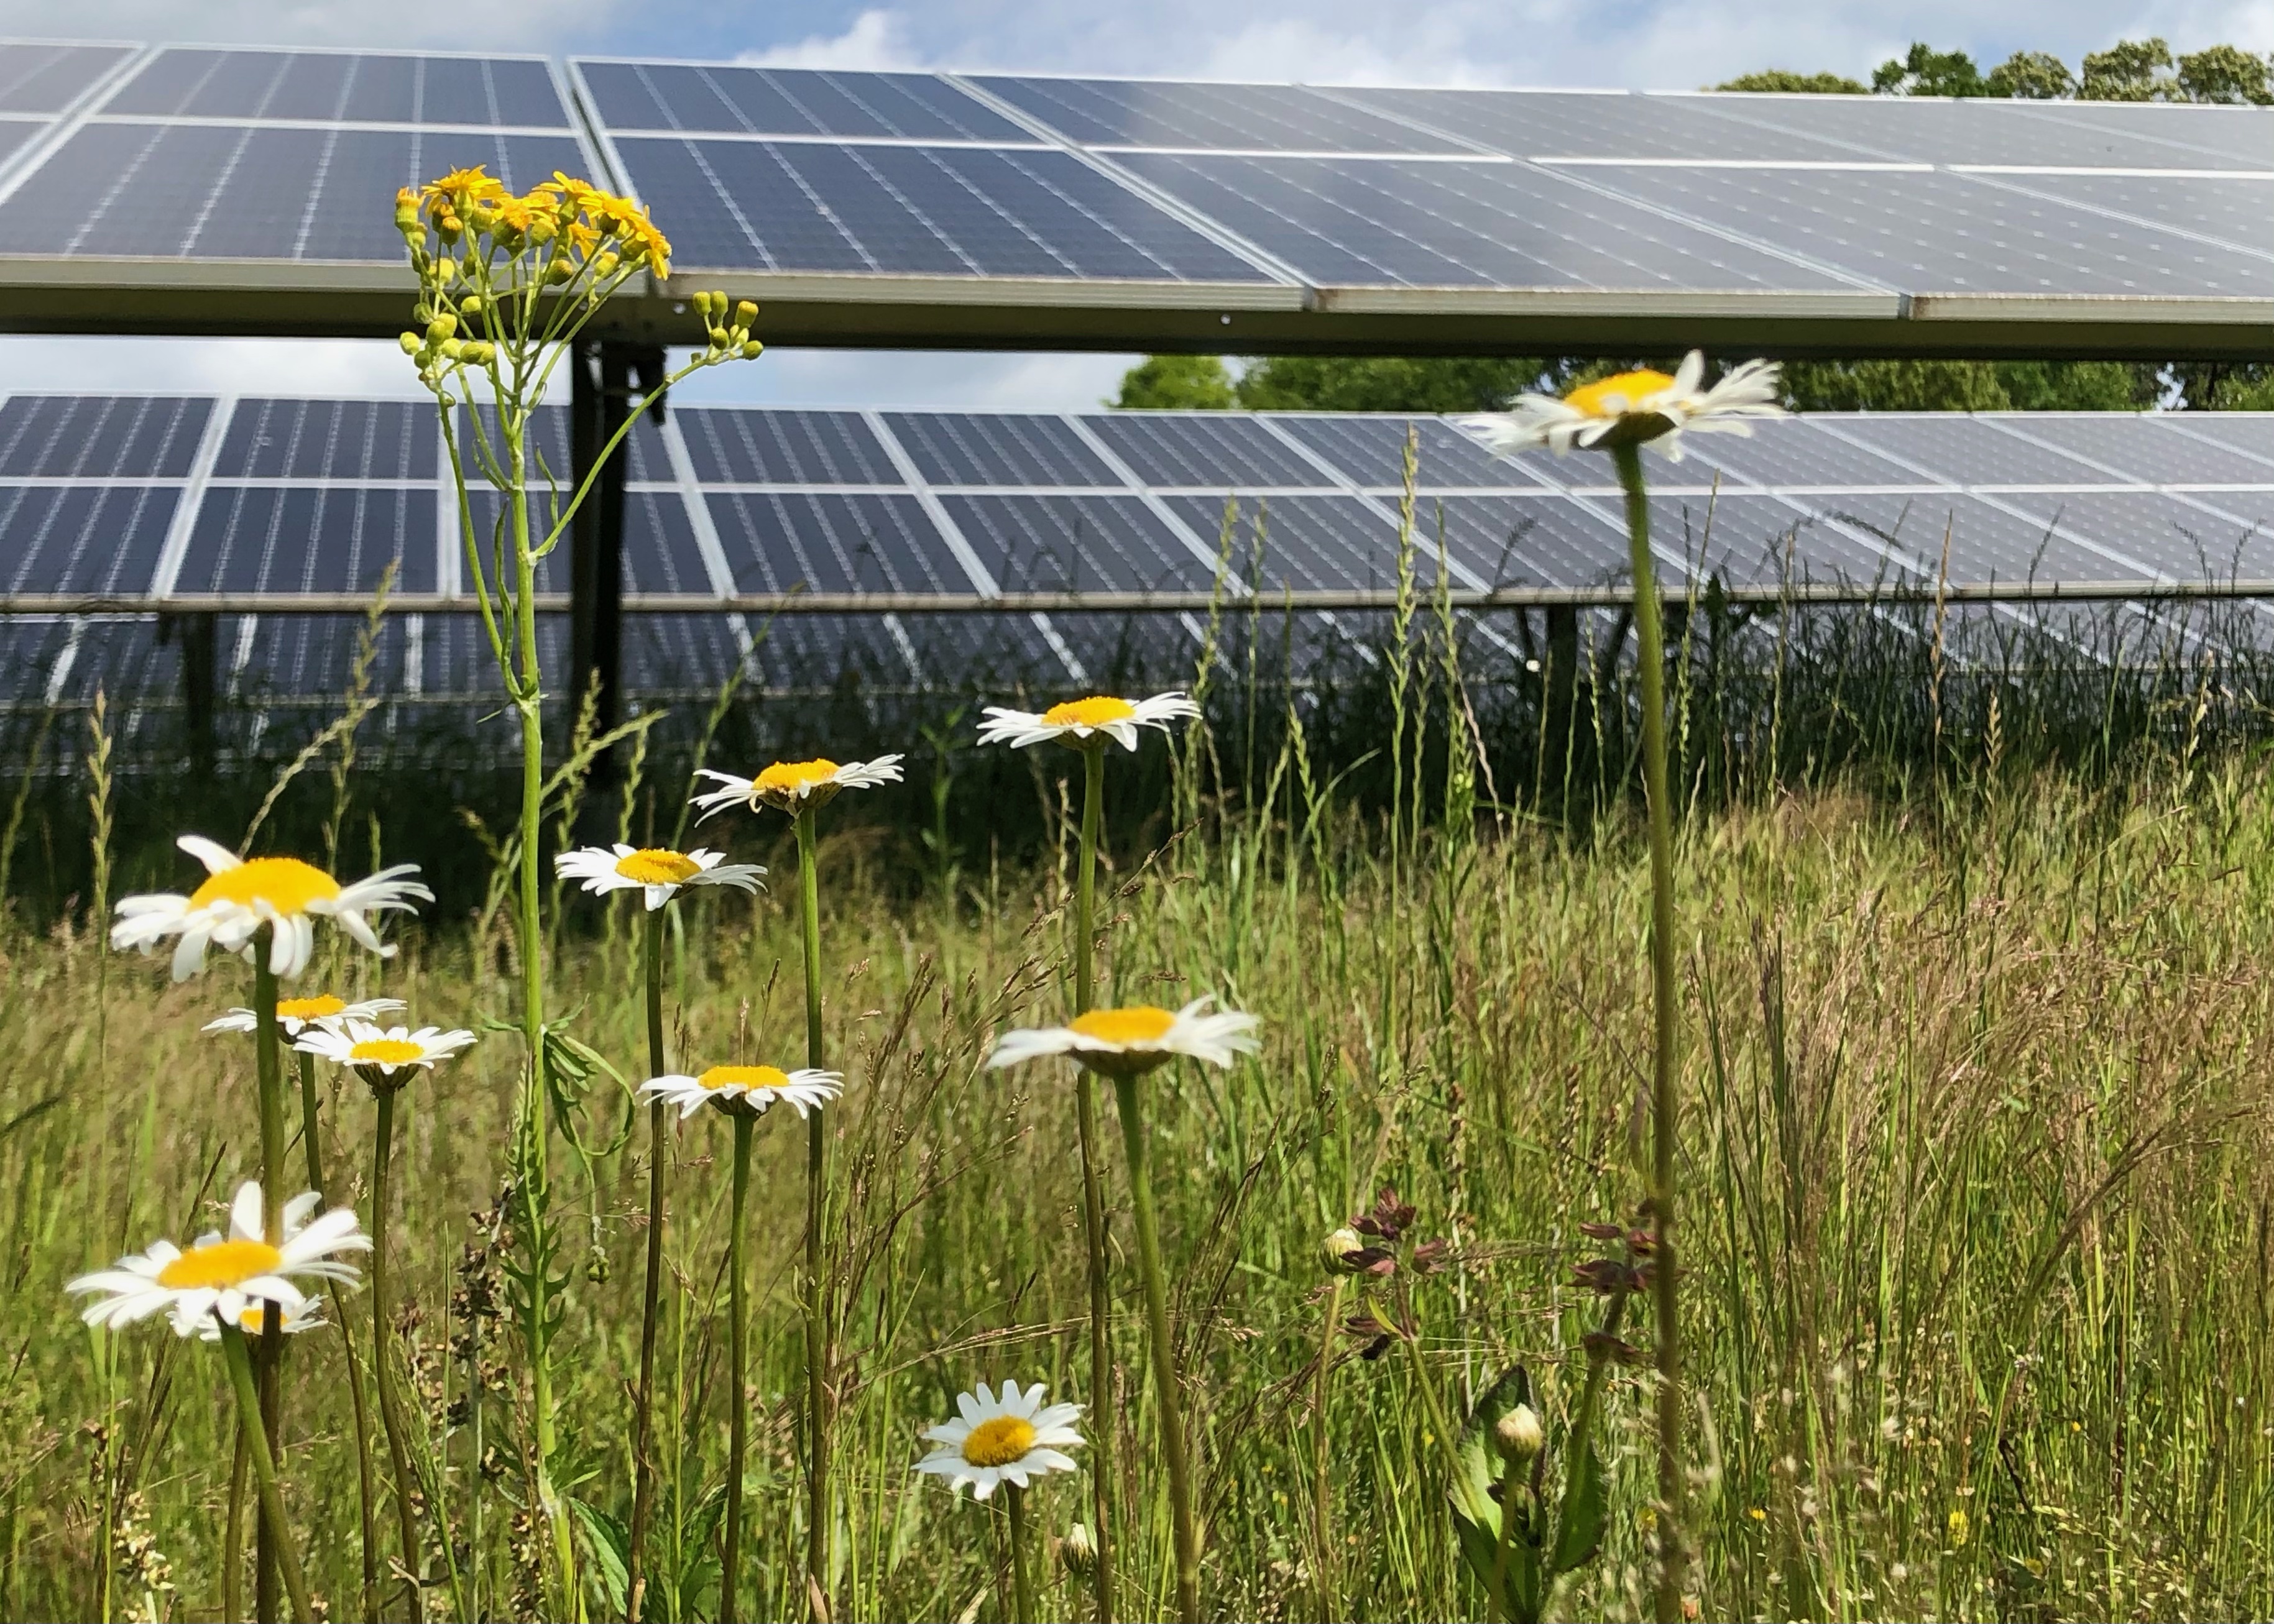 The Ray pollinator friendly solar